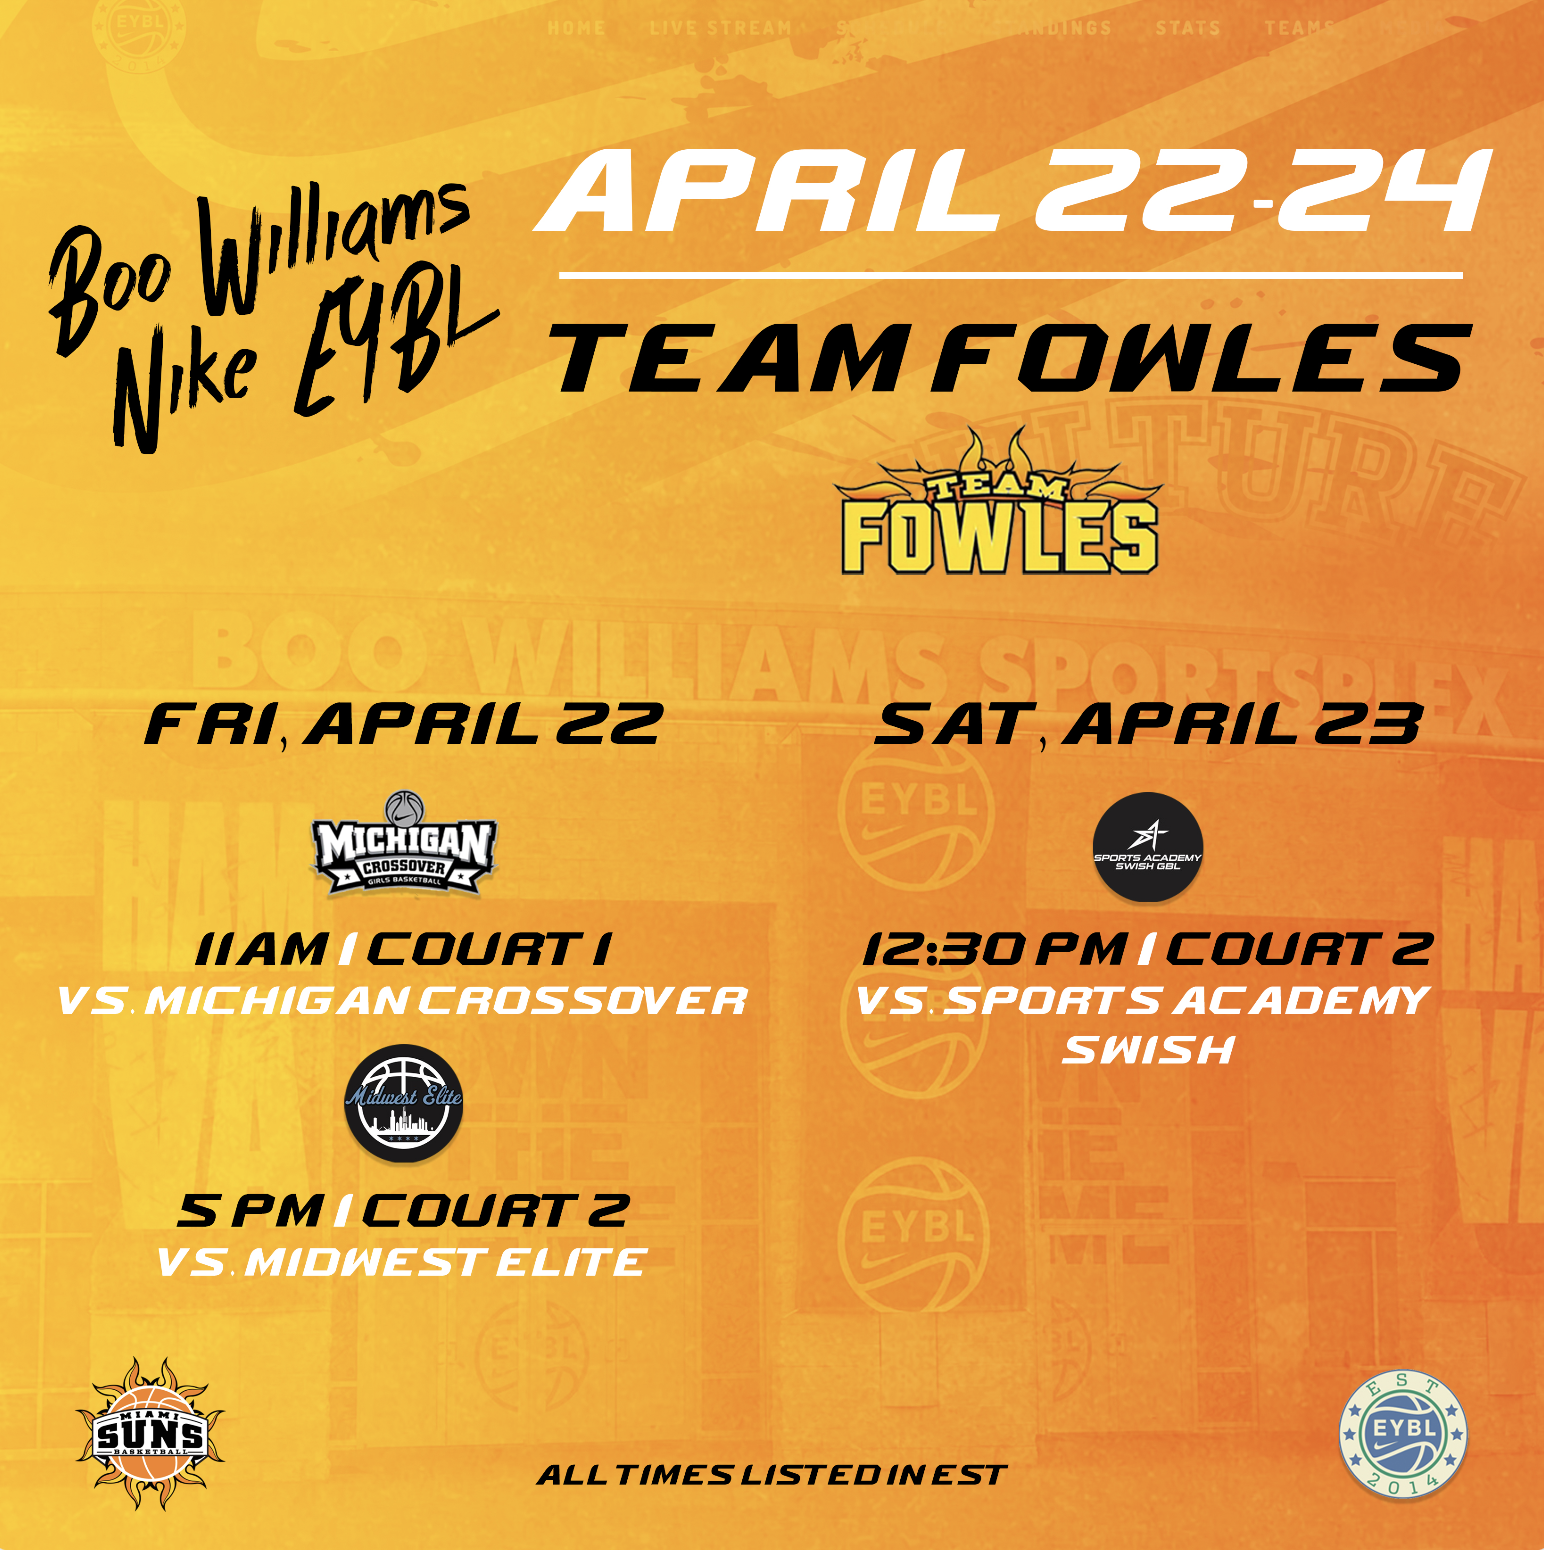 2022 Boo Williams Schedule Released: Team Fowles & Larkins